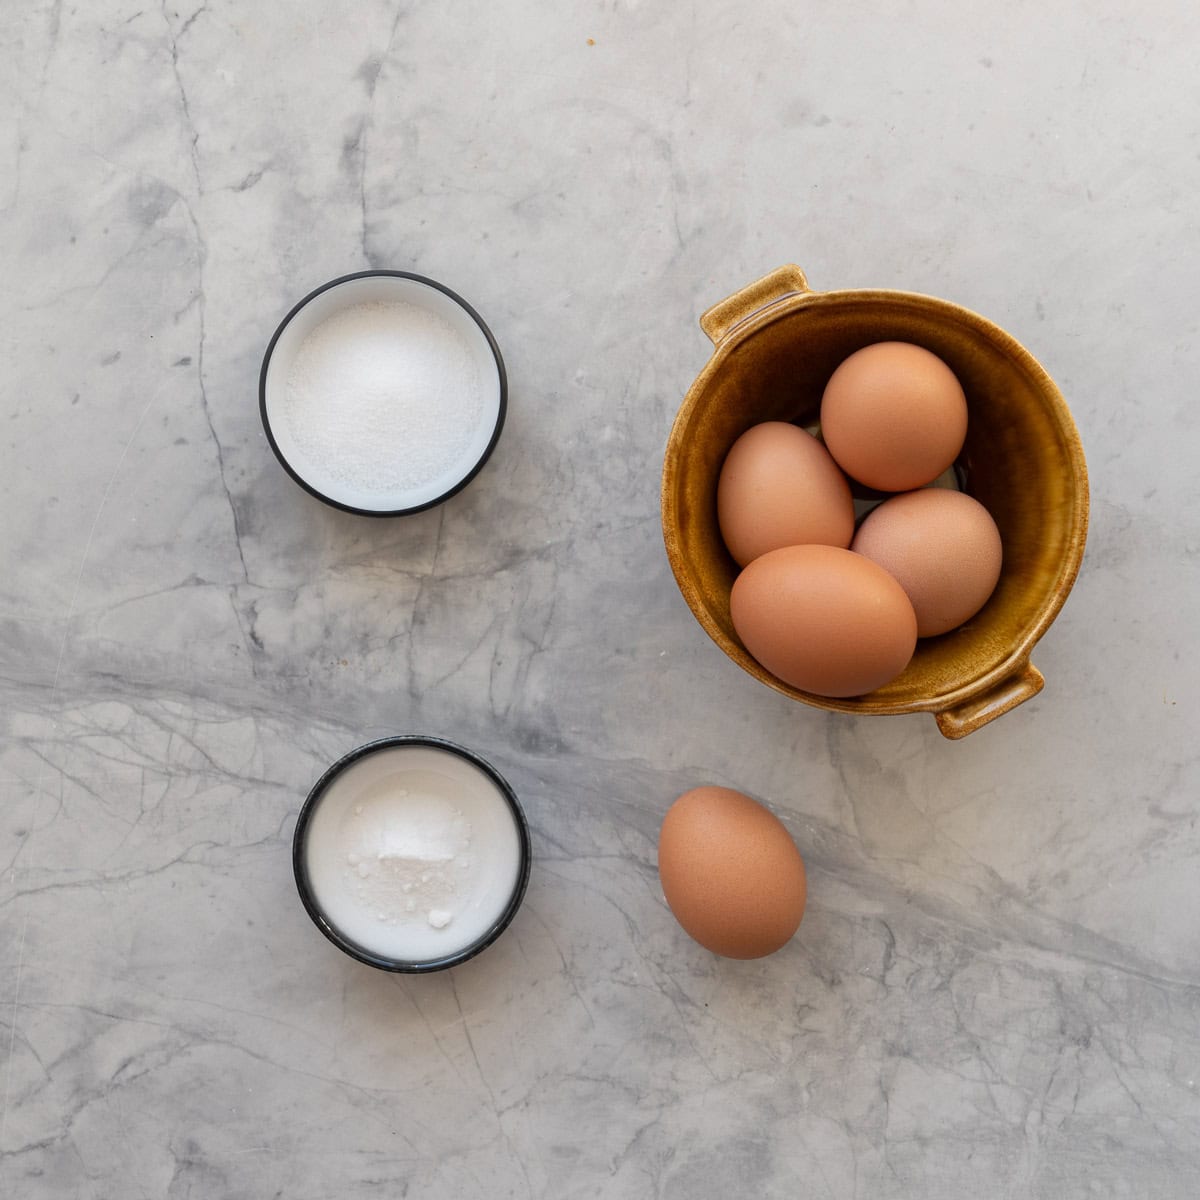 A ceramic bowl of egg, next to two ramekins holding white powders.